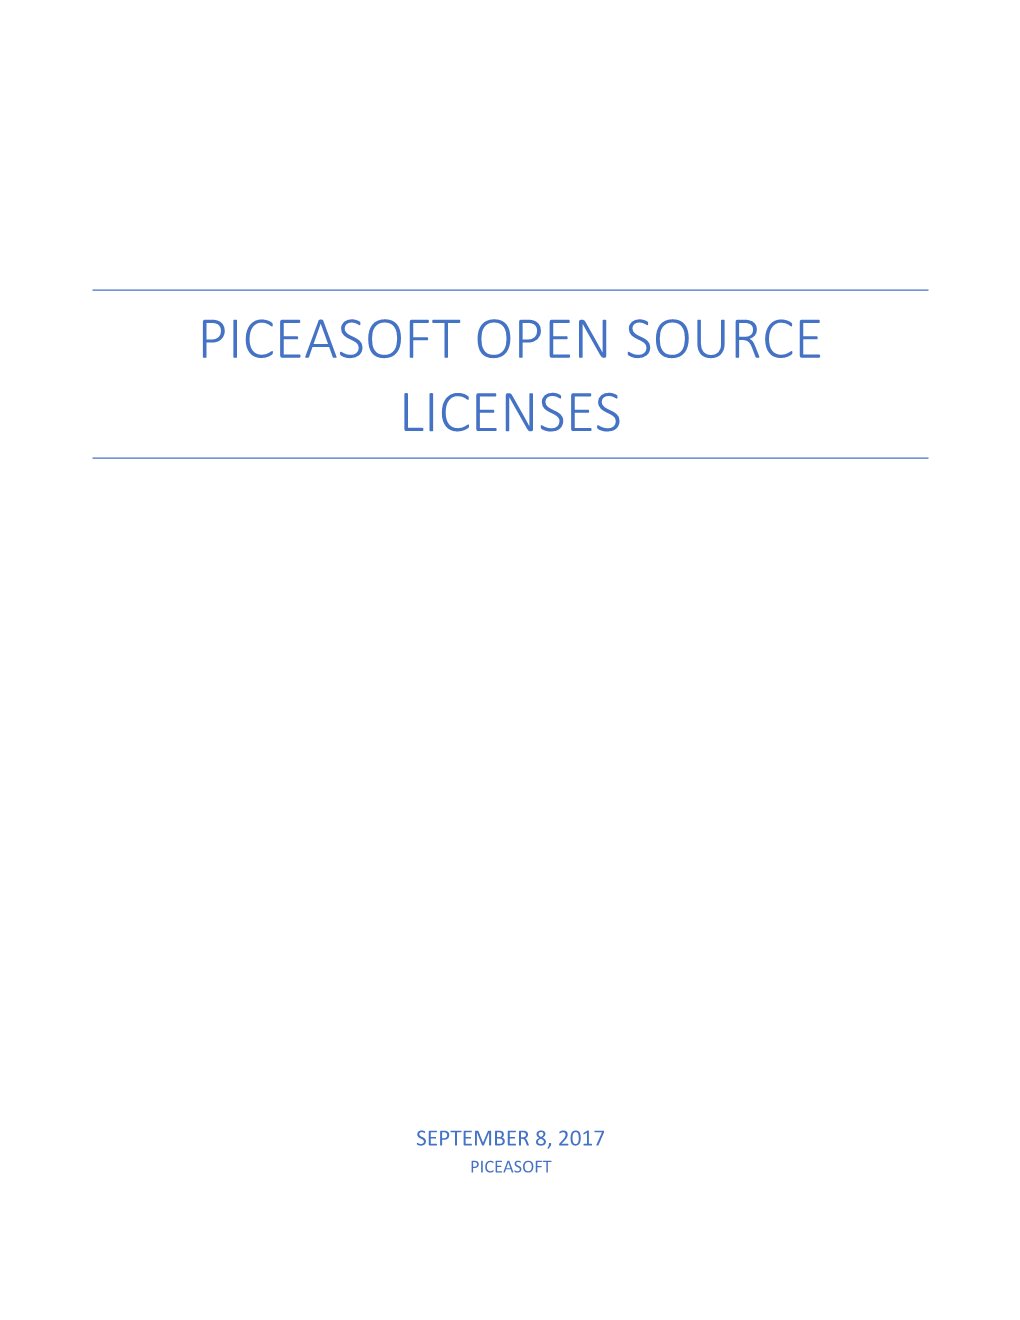 Piceasoft Open Source Licenses